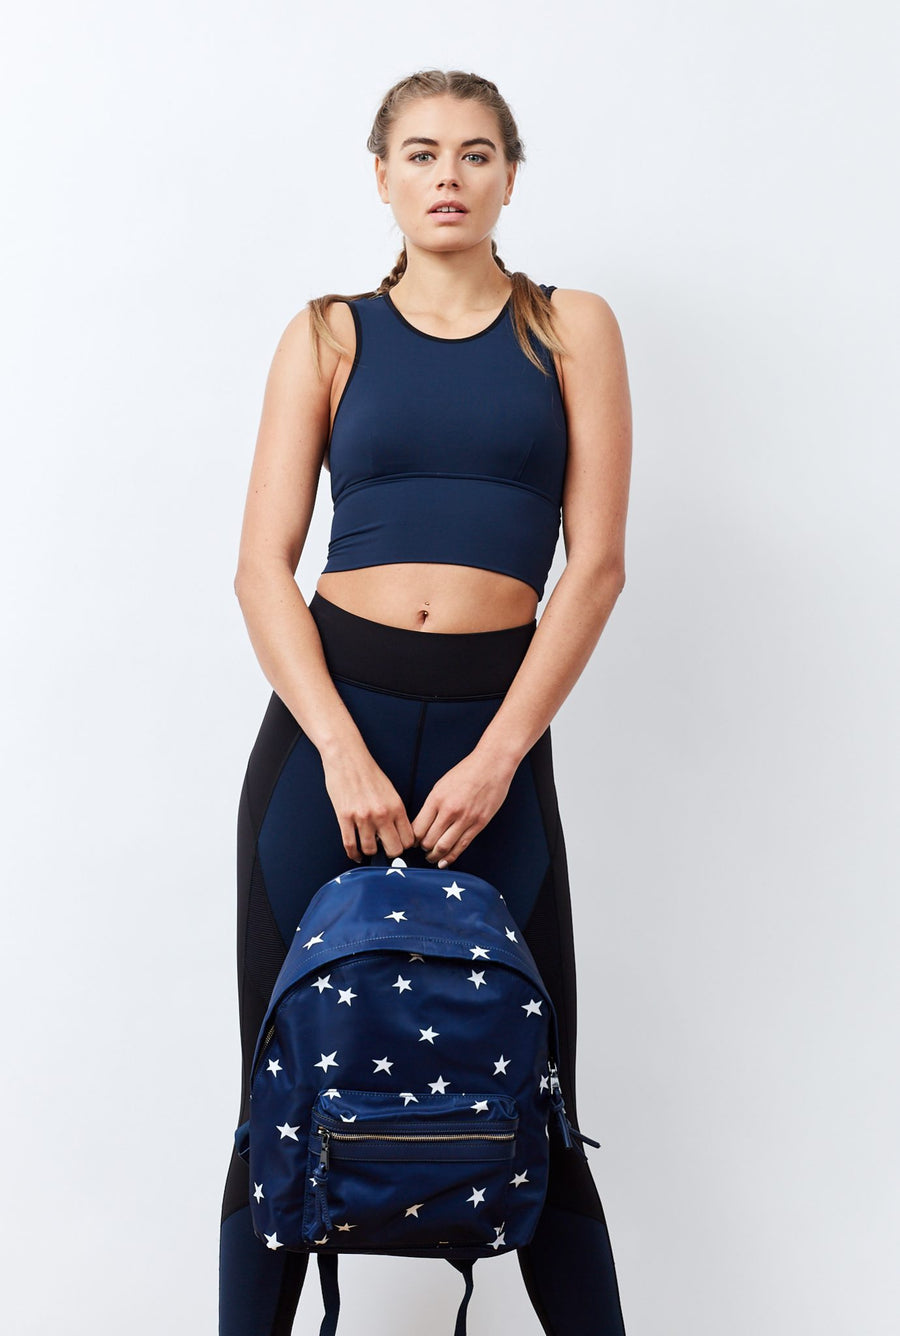 Stars Infinity Backpack